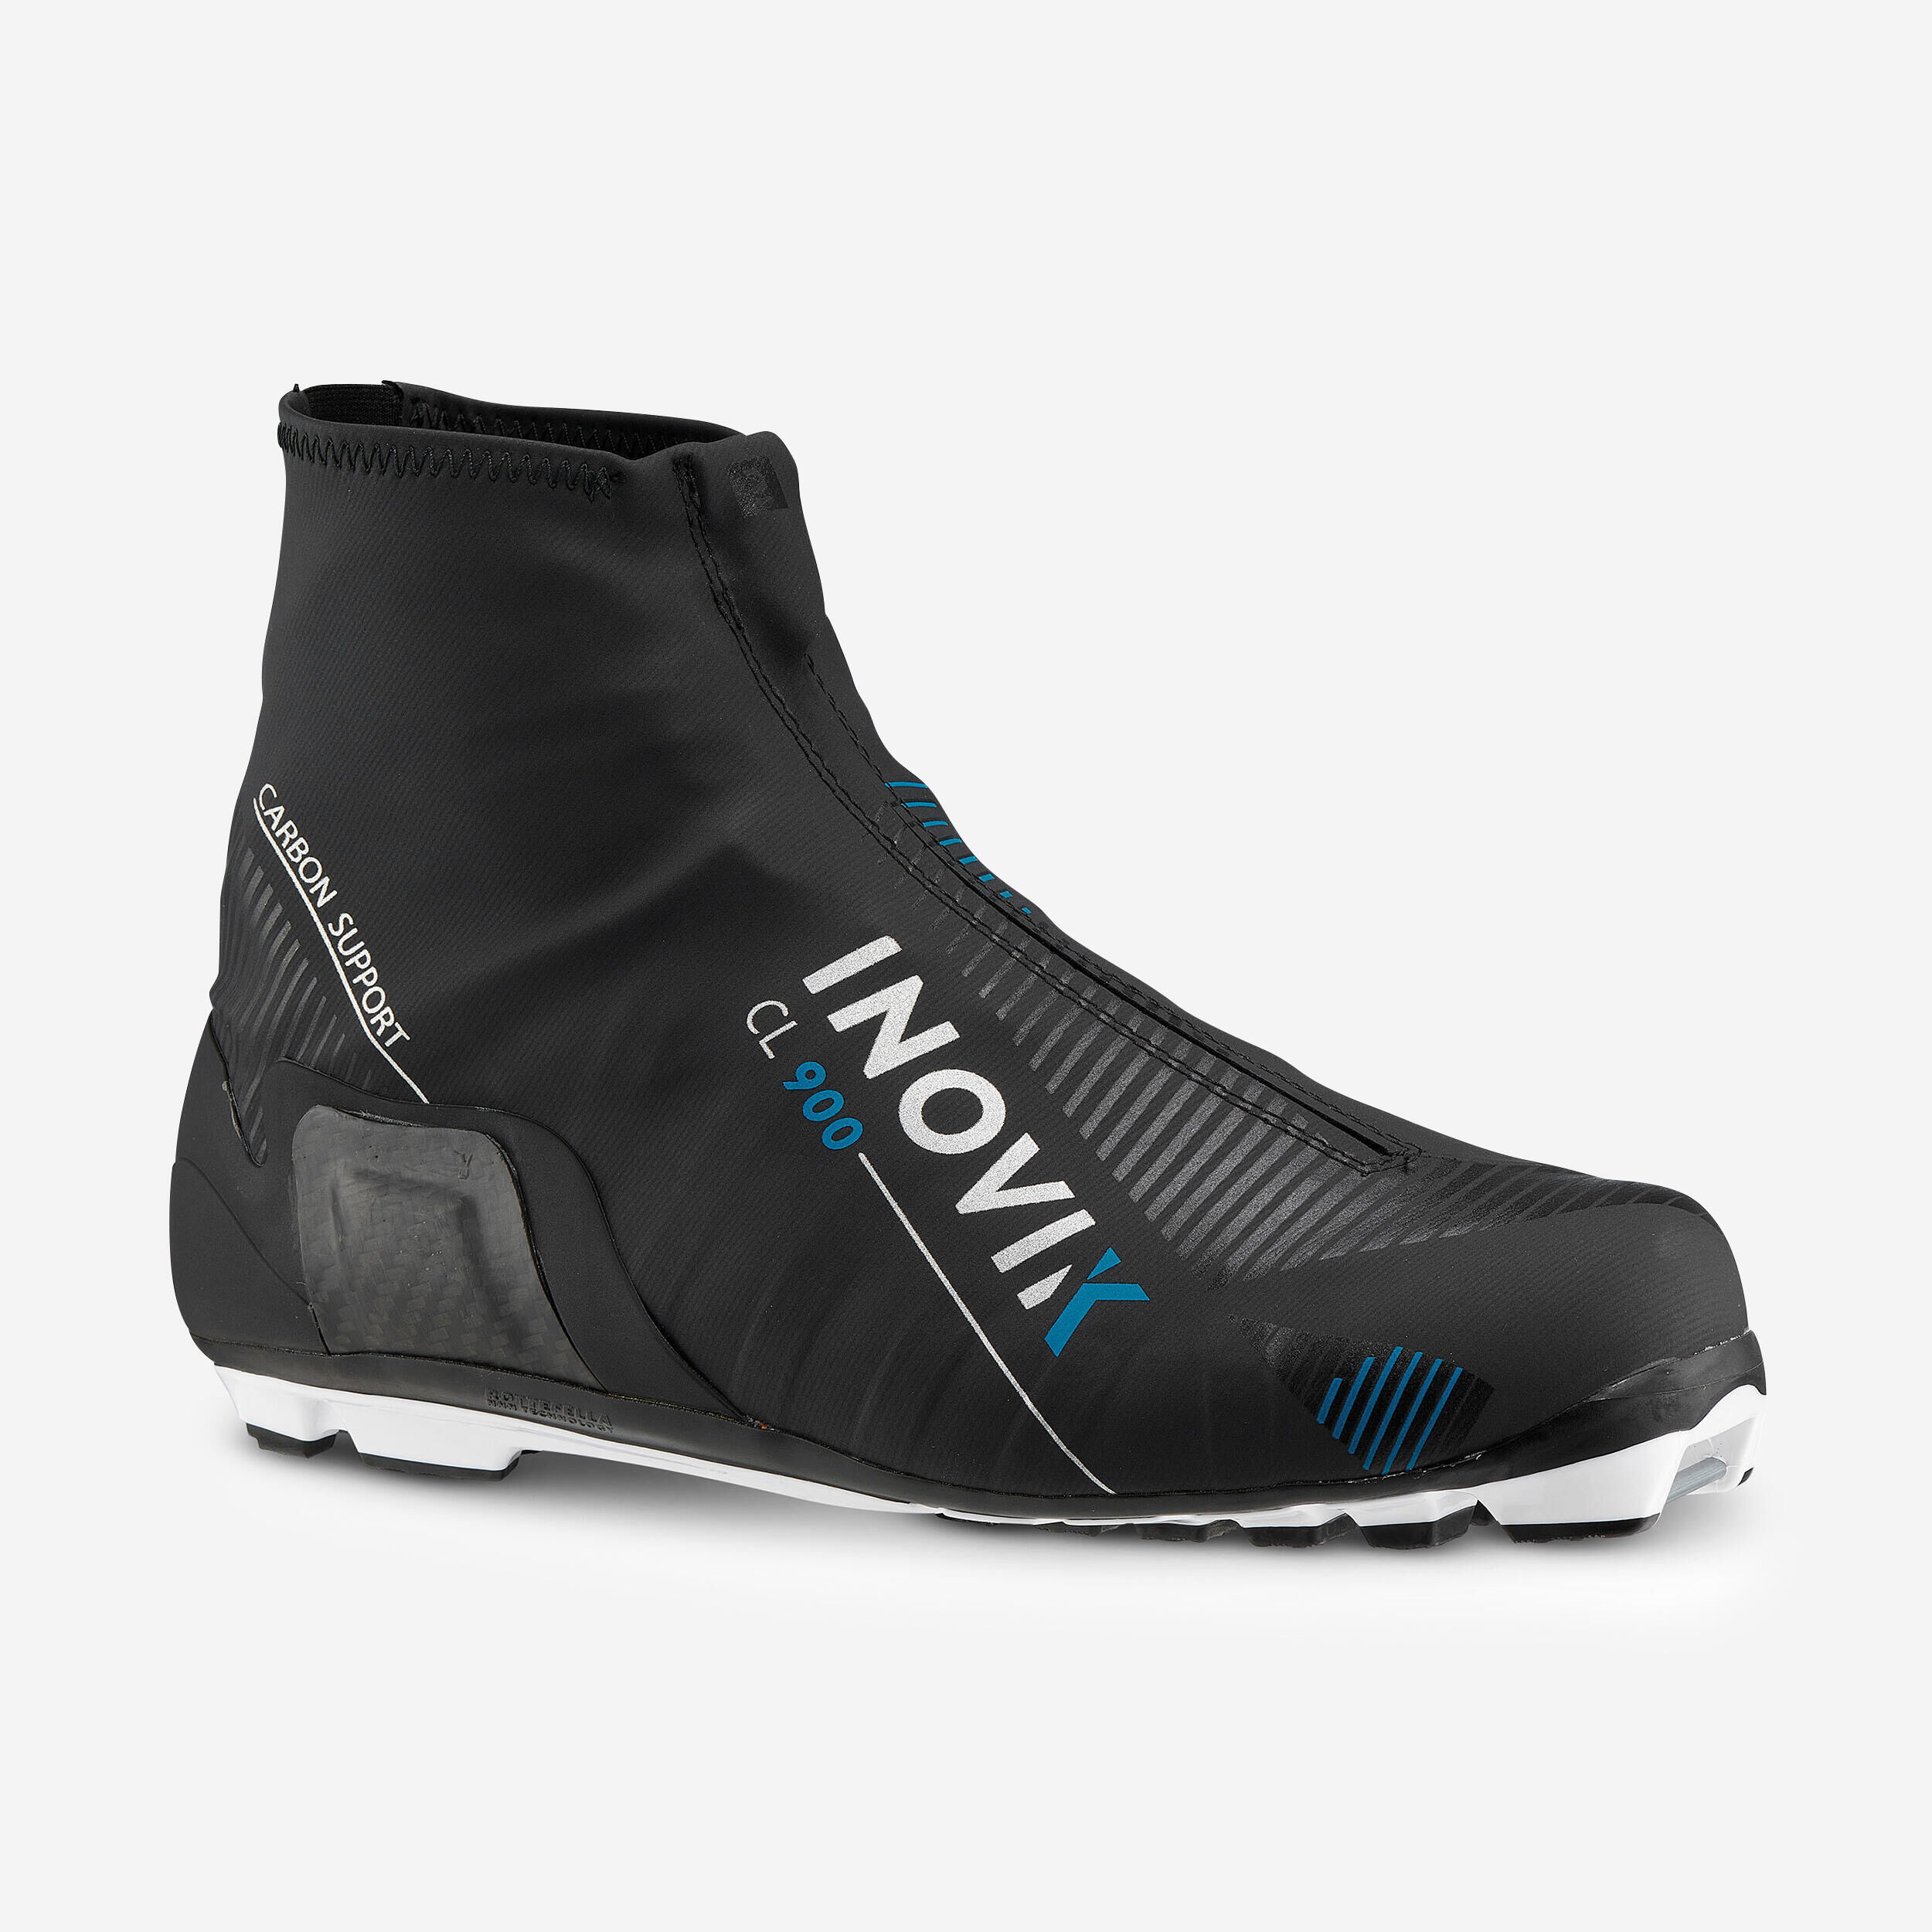 INOVIK Refurbished Adult Classic Cross-Country Ski Boots - XC S BOOTS 900 - C Grade